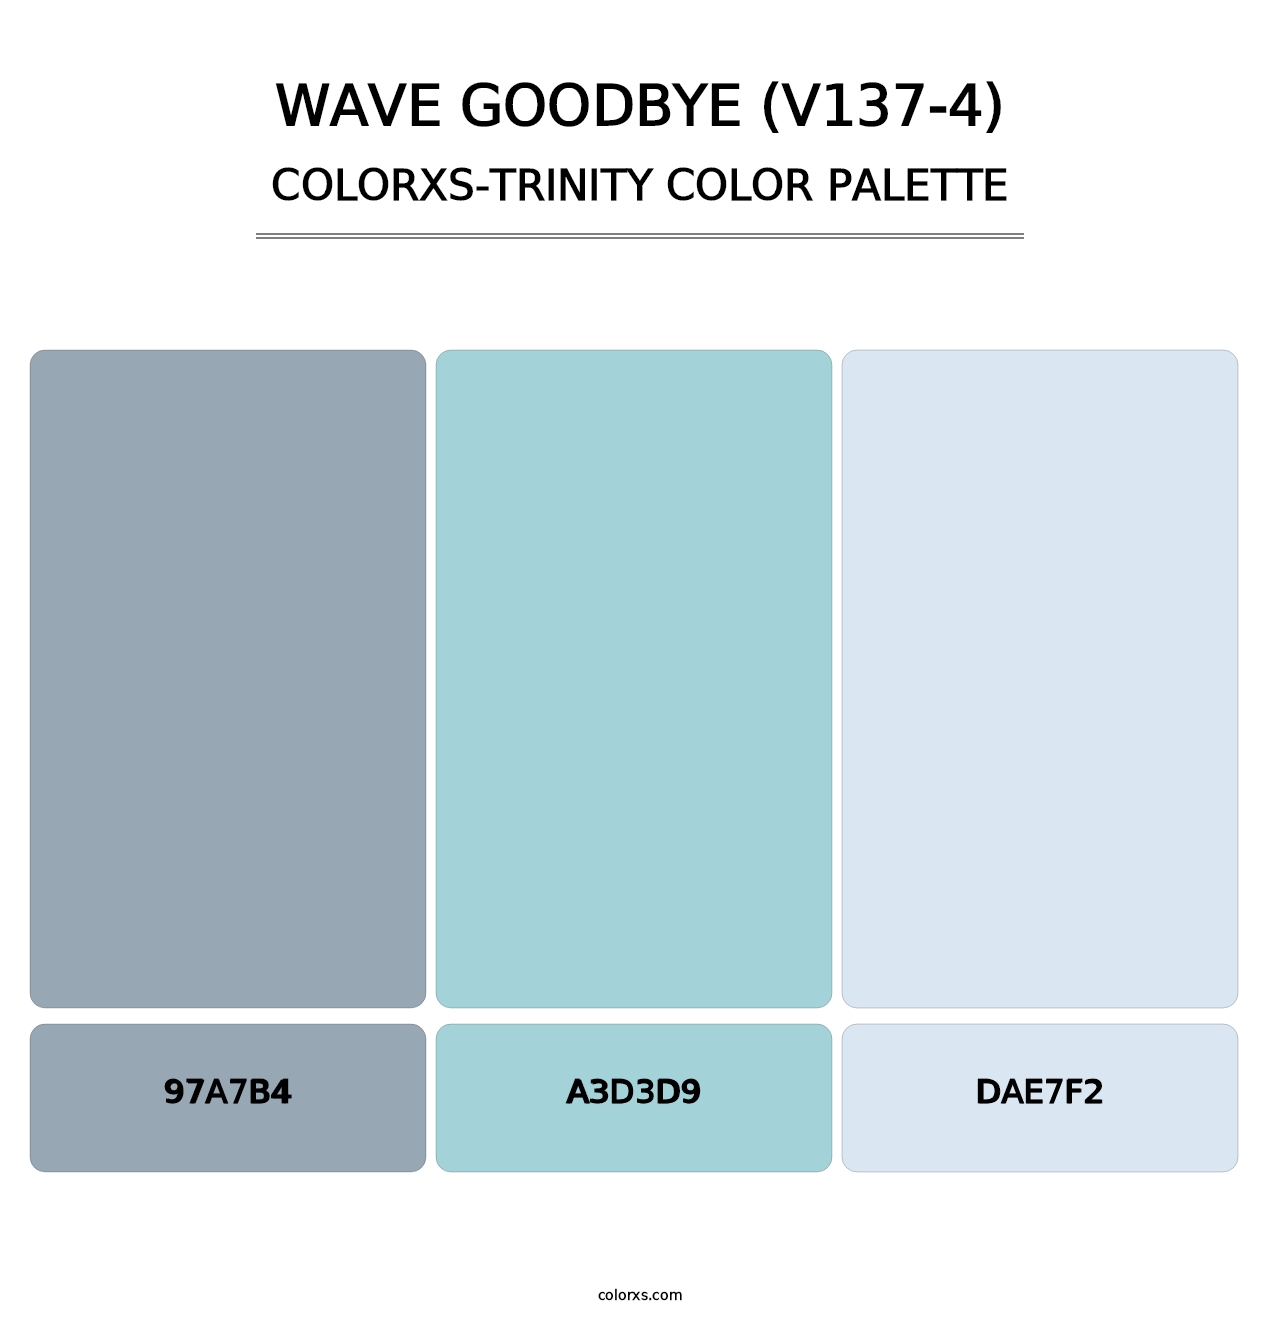 Wave Goodbye (V137-4) - Colorxs Trinity Palette